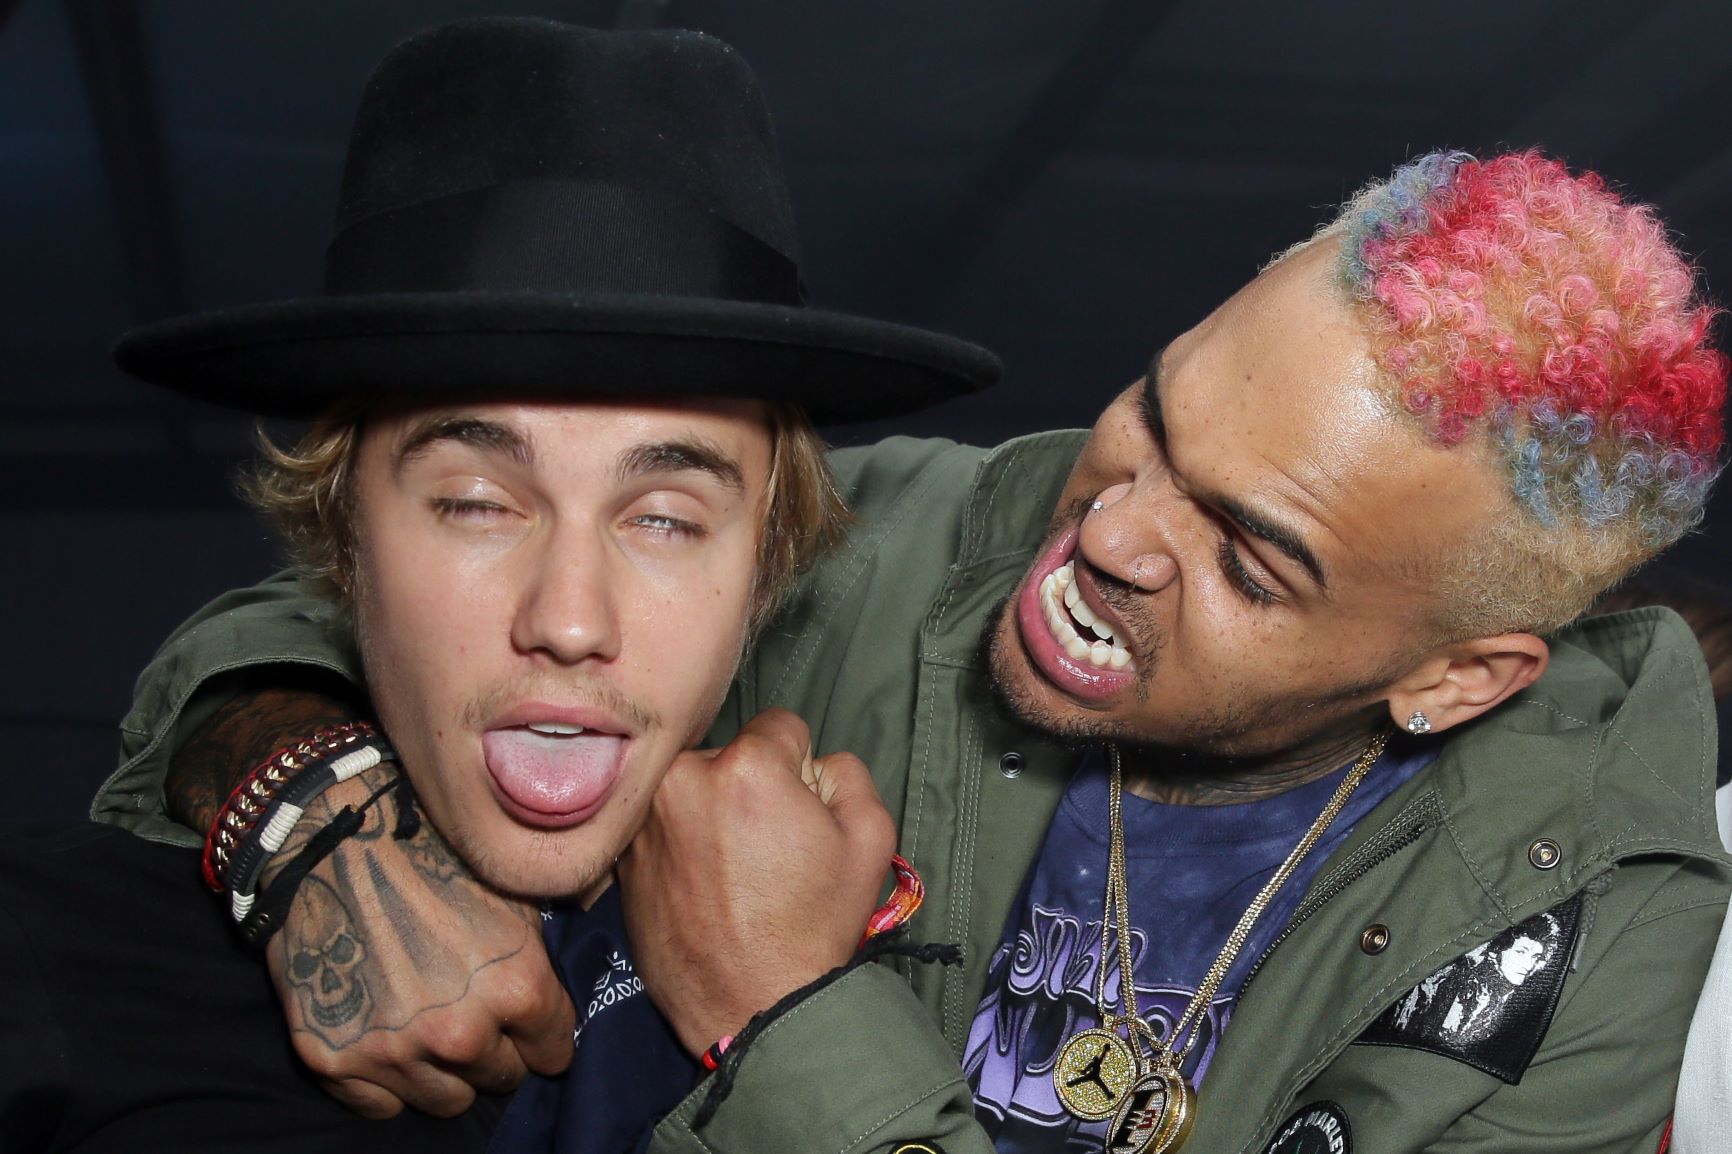 Justin Bieber justifica brutal golpiza de Chris Brown a Rihanna como “un error”